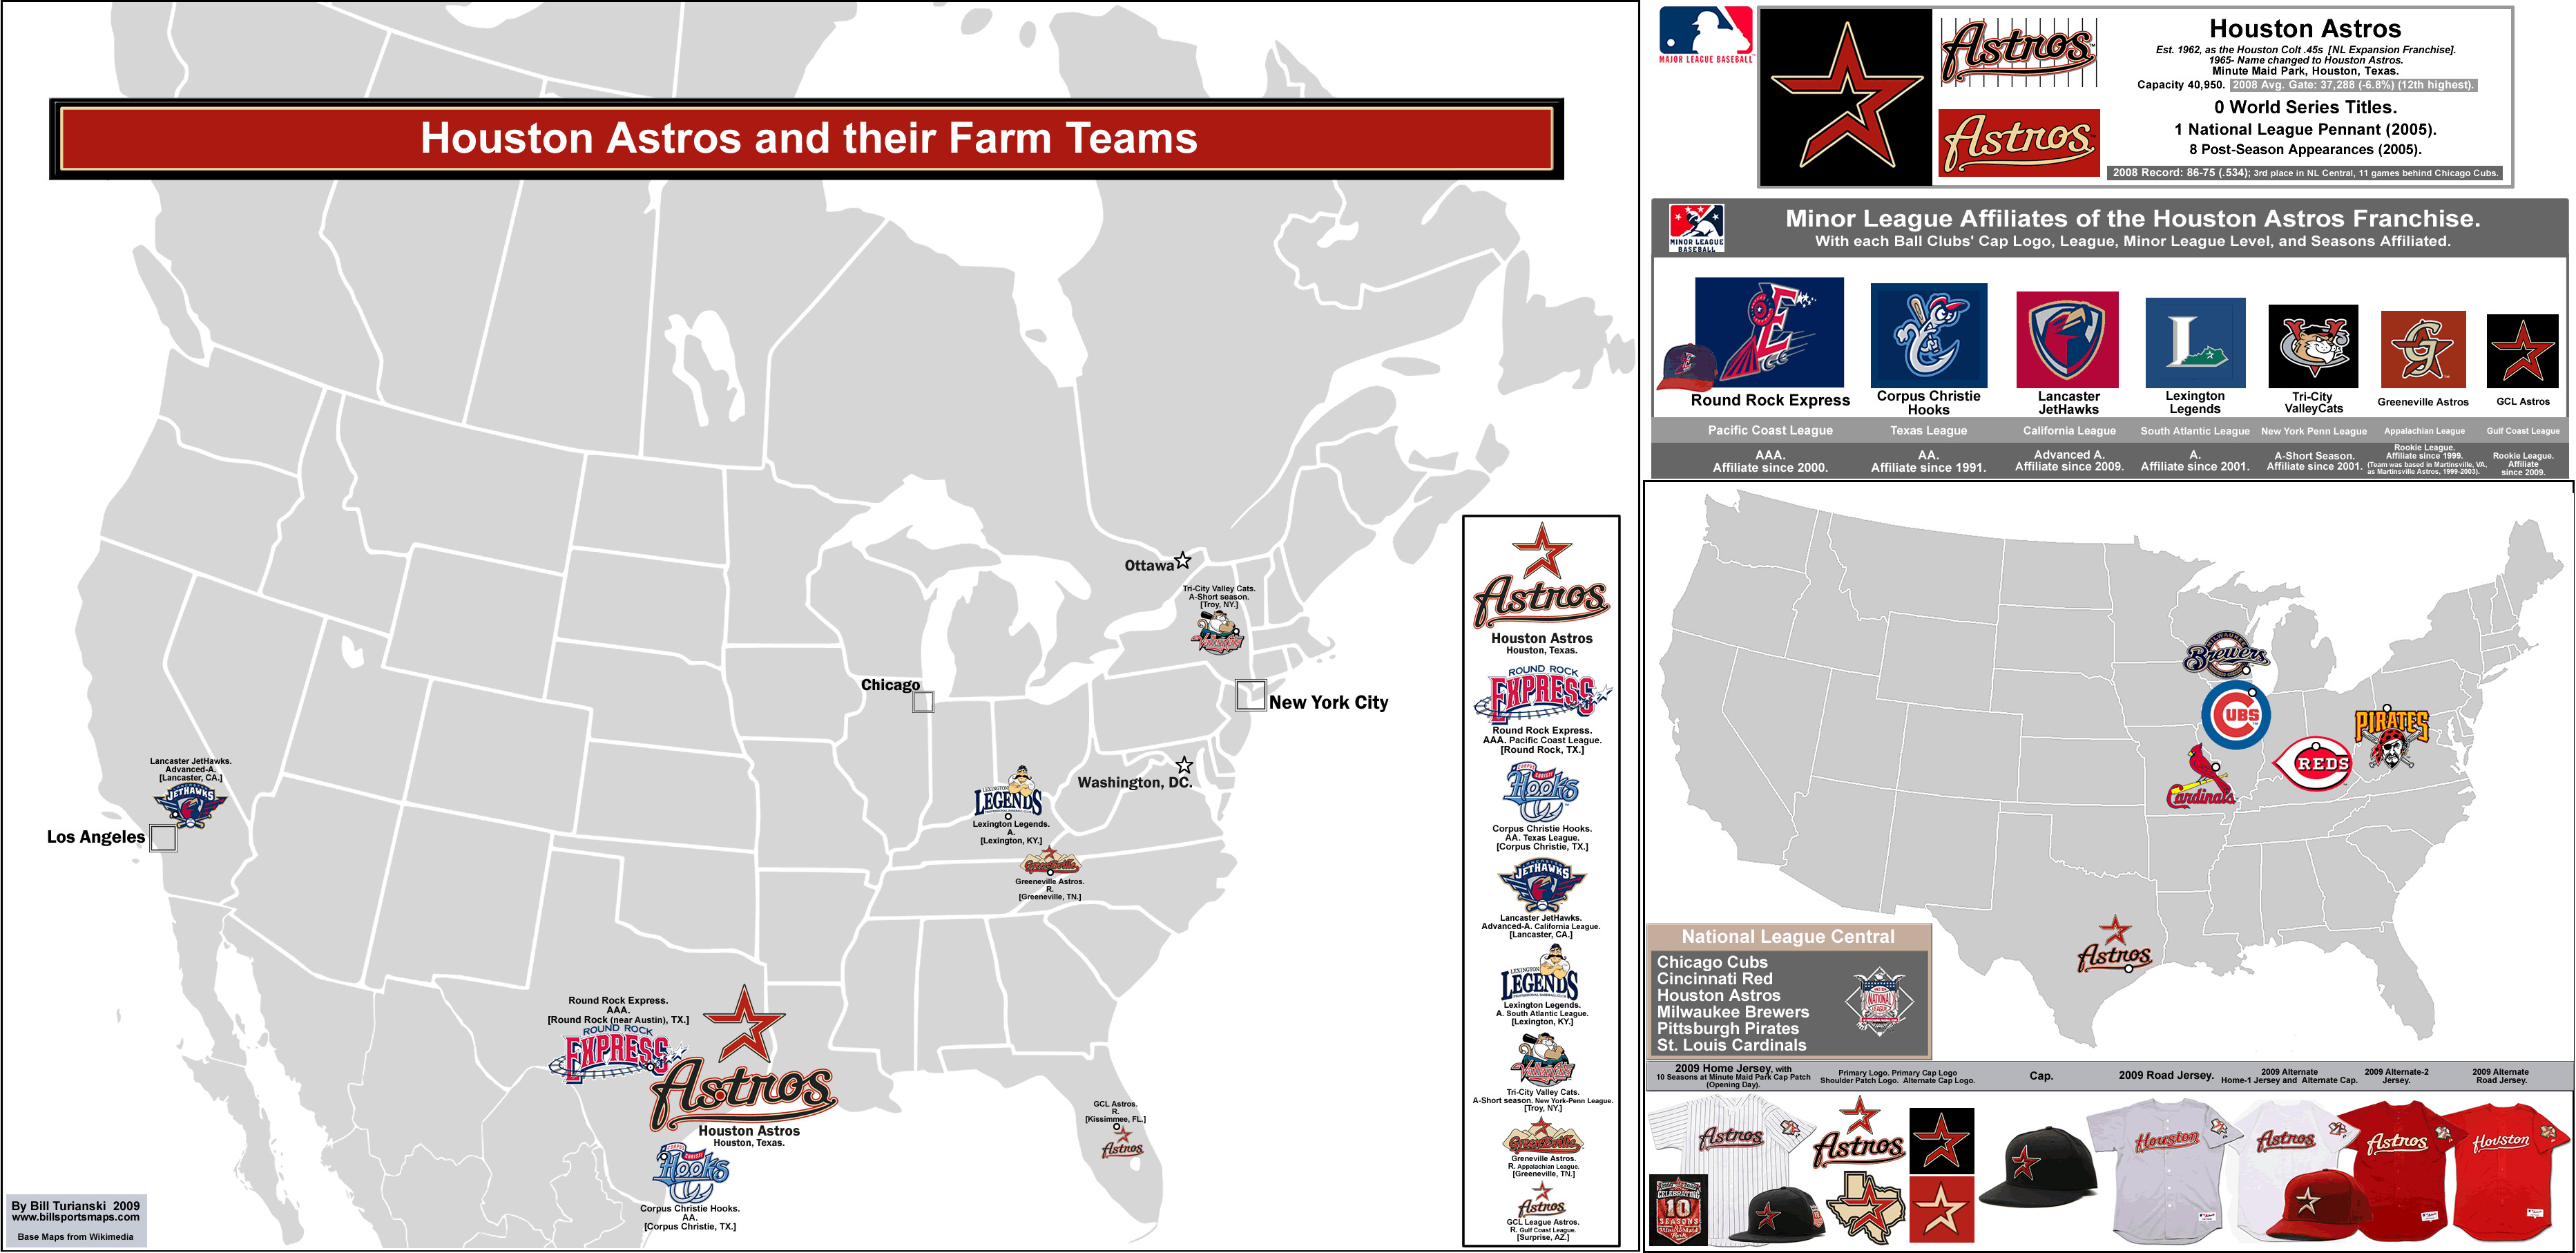 3730x1814 MLB Ball Clubs and their Minor League Affiliates: the Houston Astros.